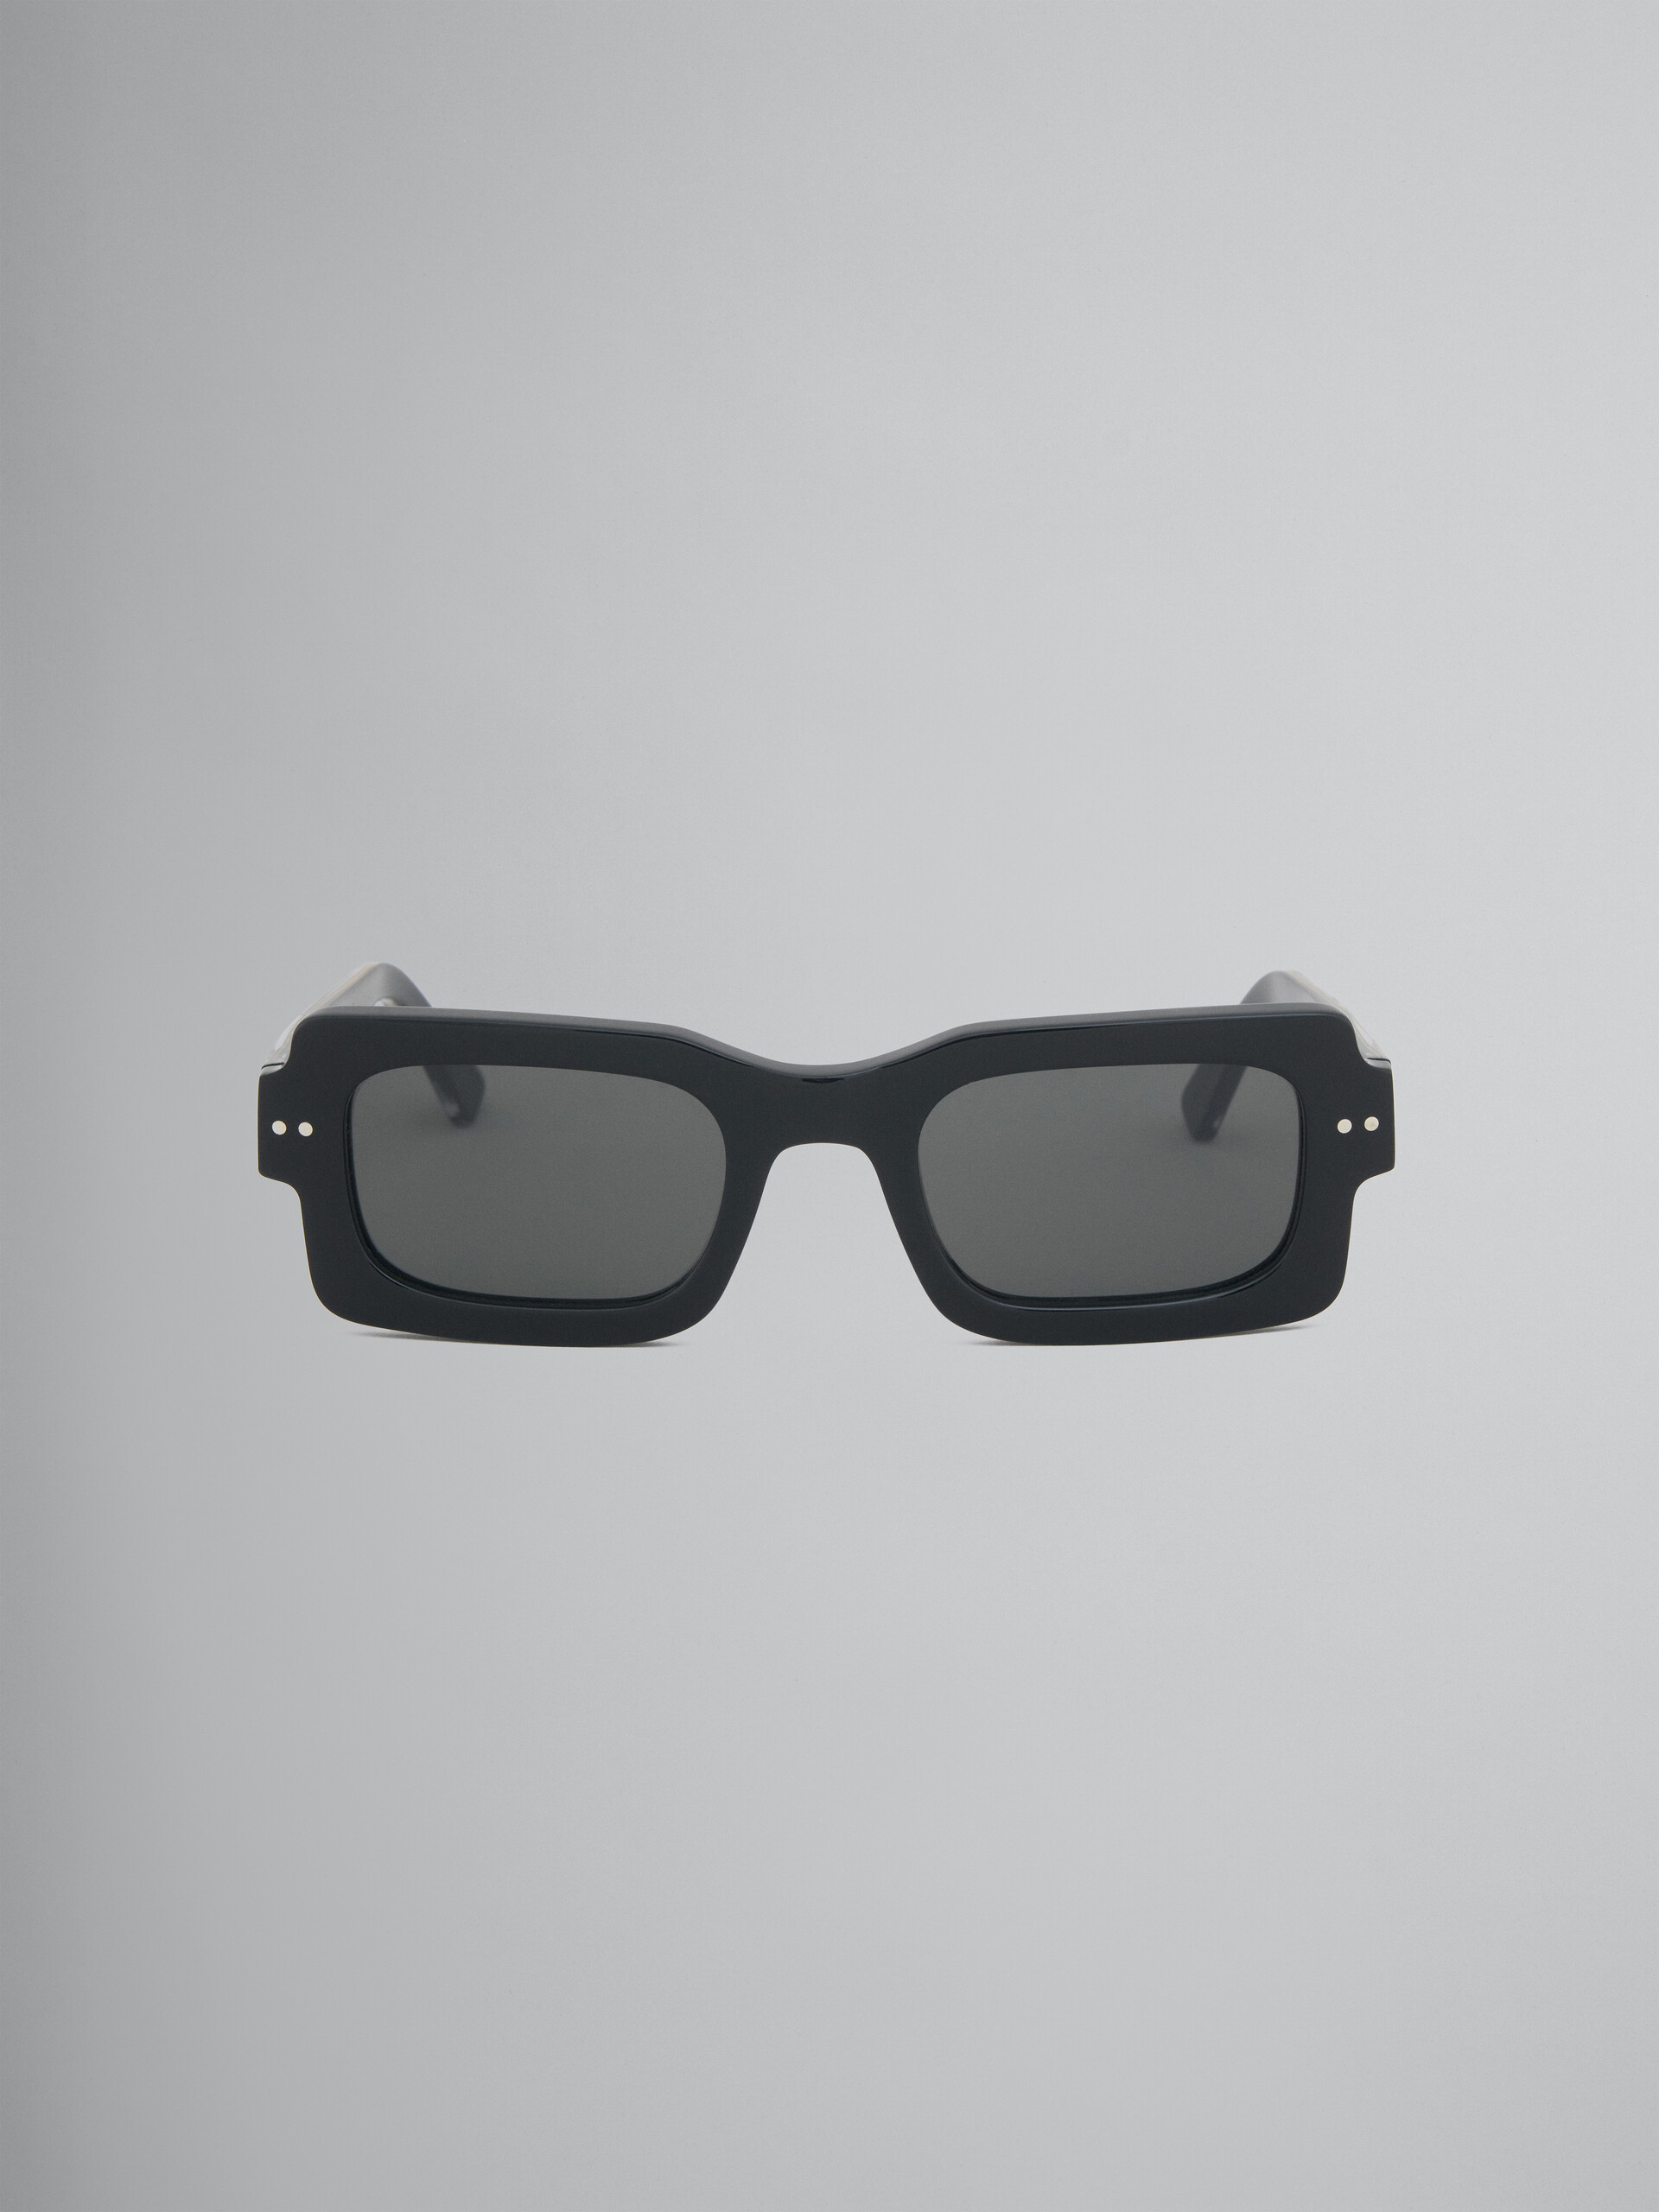 Black acetate LAKE VOSTOK sunglasses - Optical - Image 1